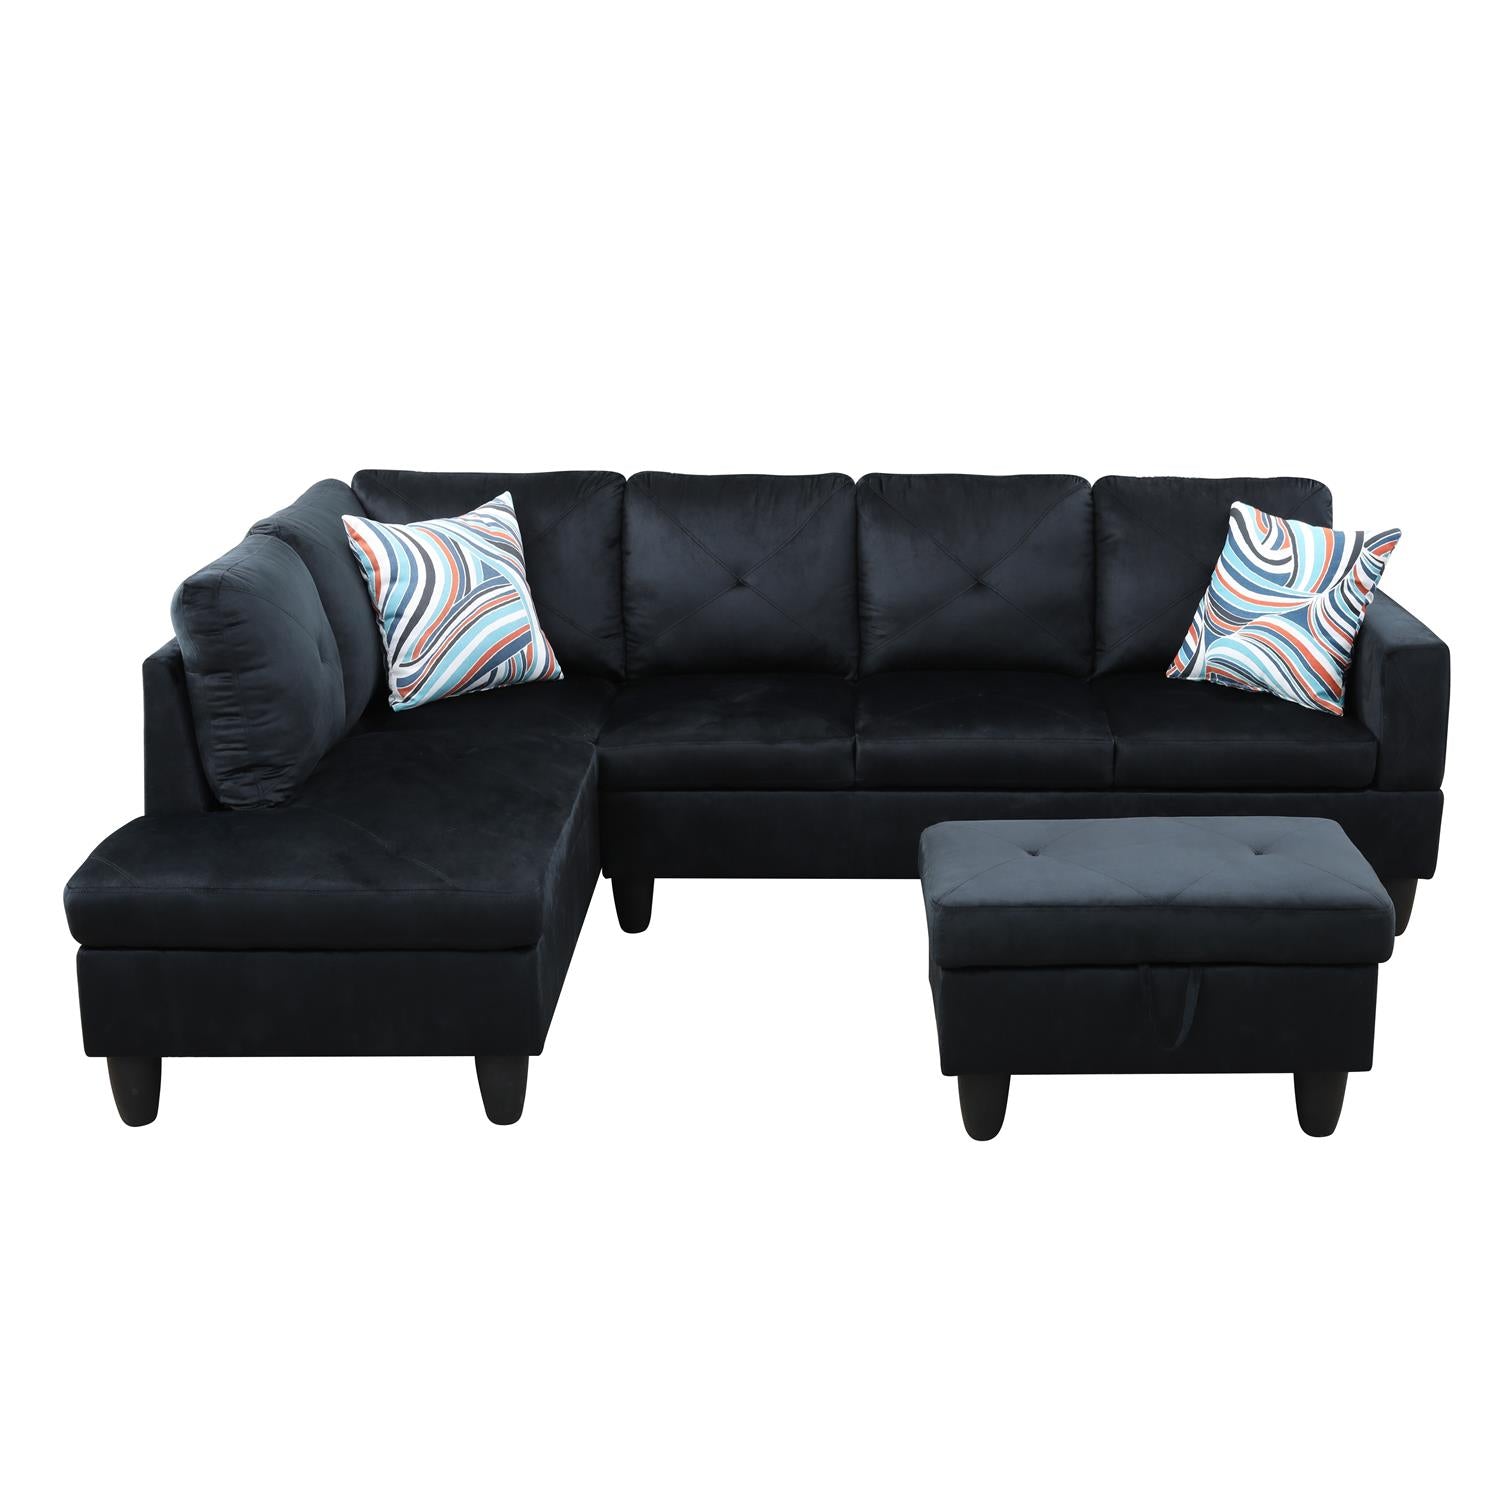 Ainehome Black L-Shaped Microfiber Sofa Set